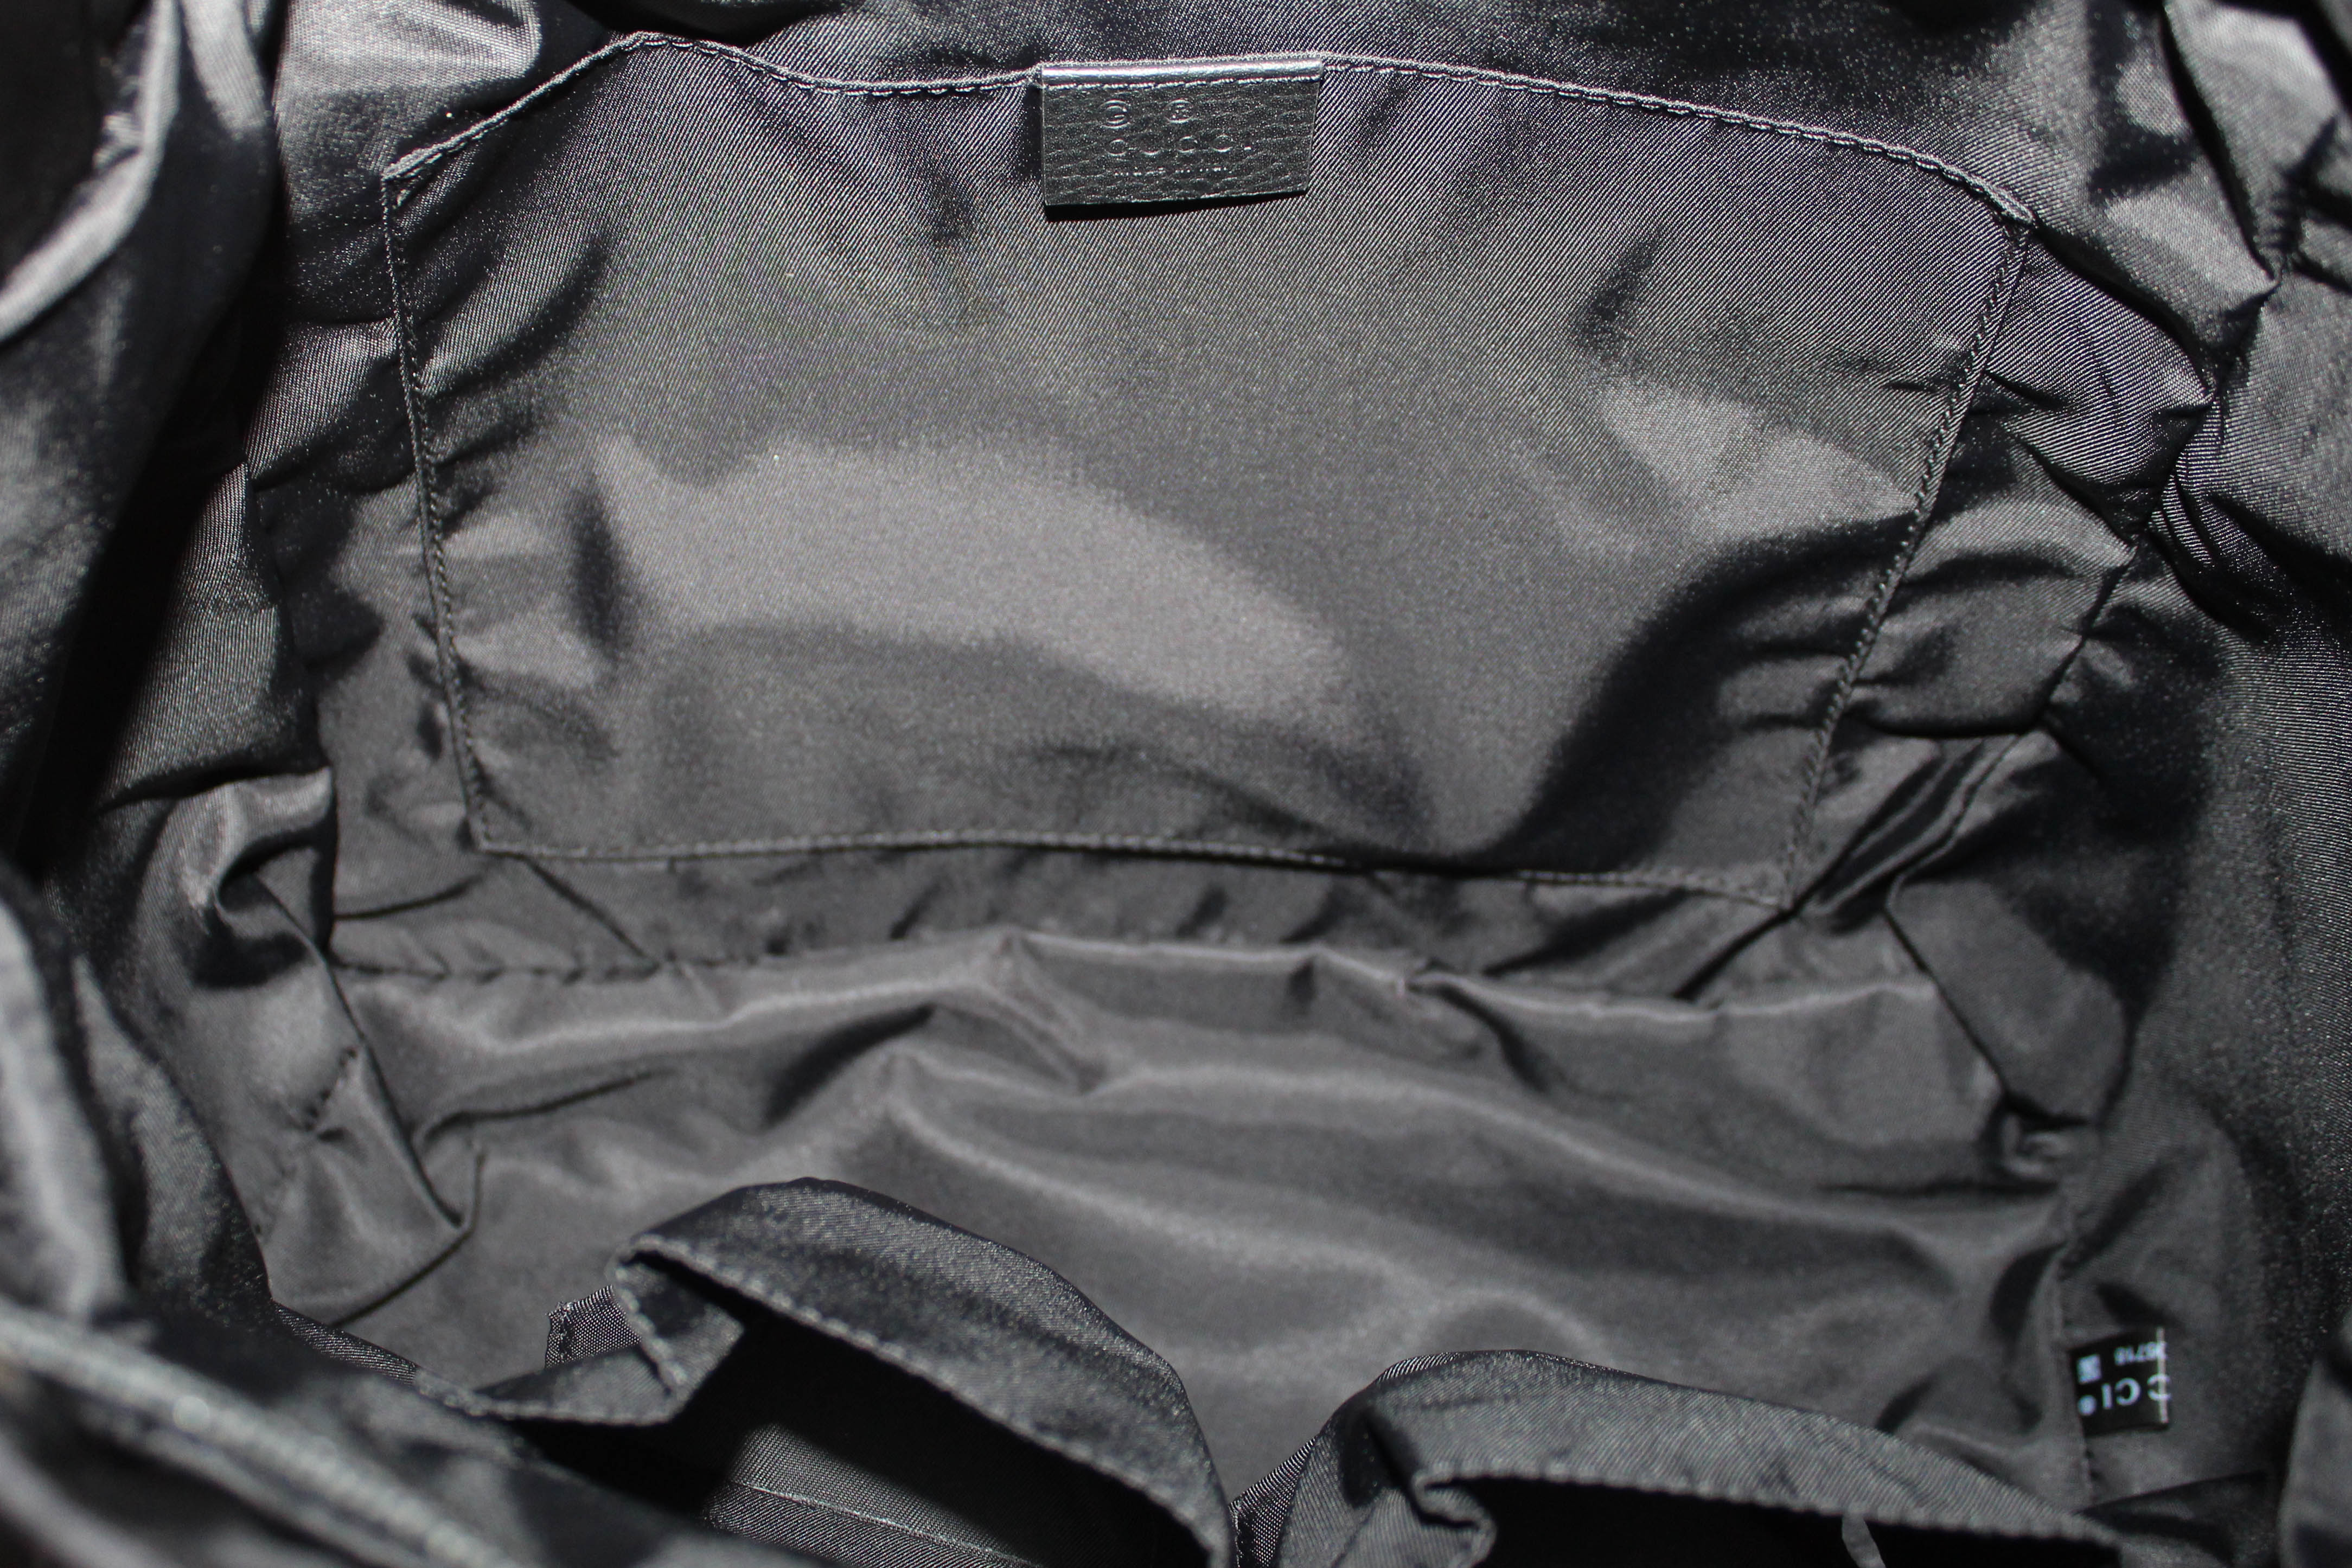 Gucci Gucci GG Nylon Rucksack Backpack 5105343 Black a Argentina.  CosmoStore Argentina